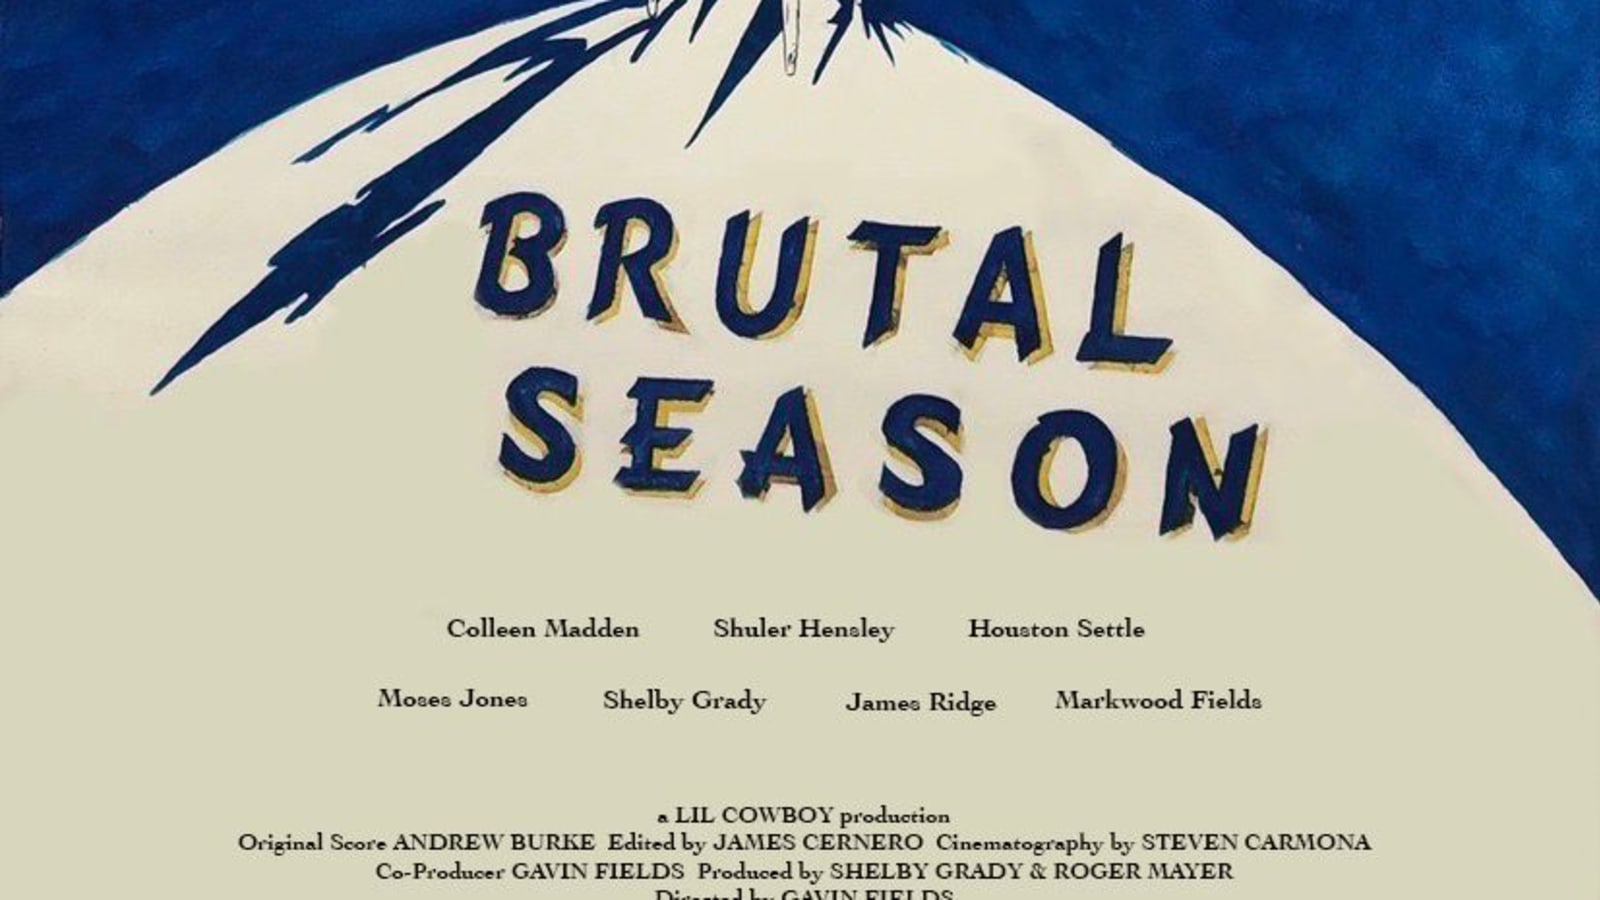 Georgia Entertainment presents: Brutal Season